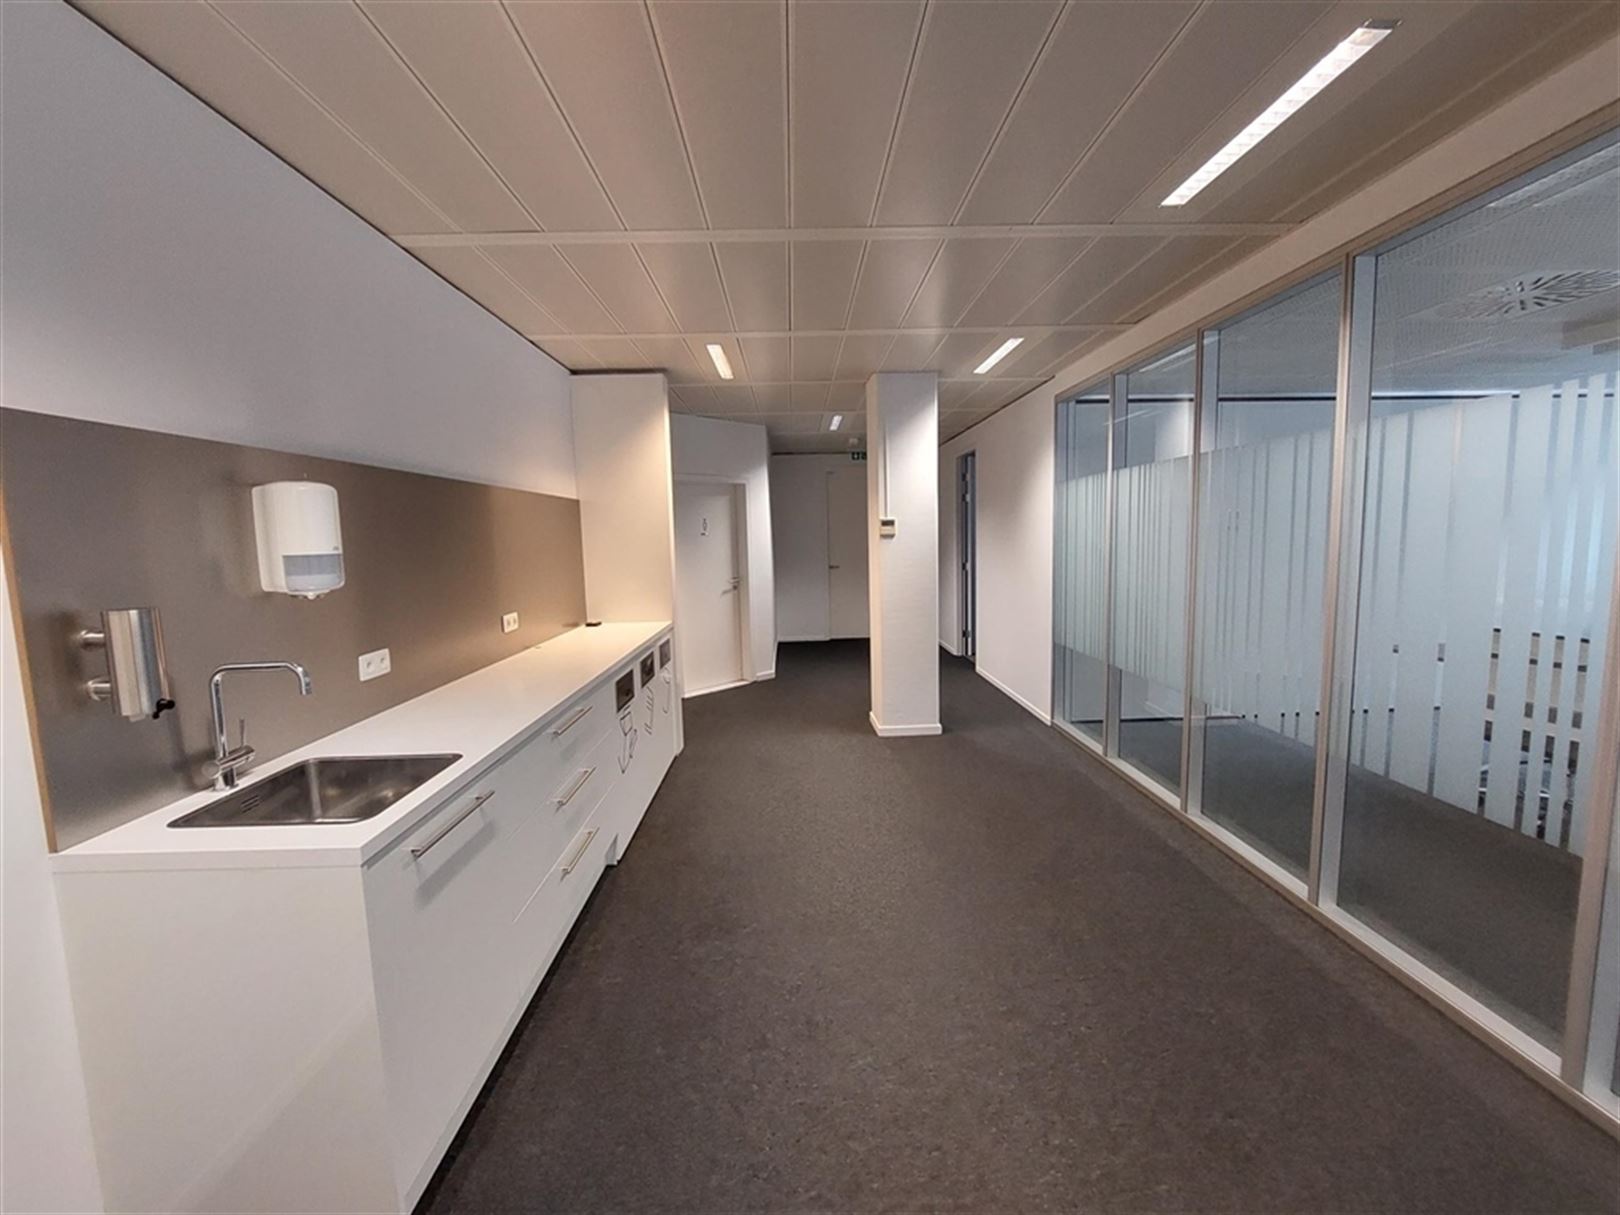 BOECHOUT 55: kantoren te huur vanaf 440 m² foto 6